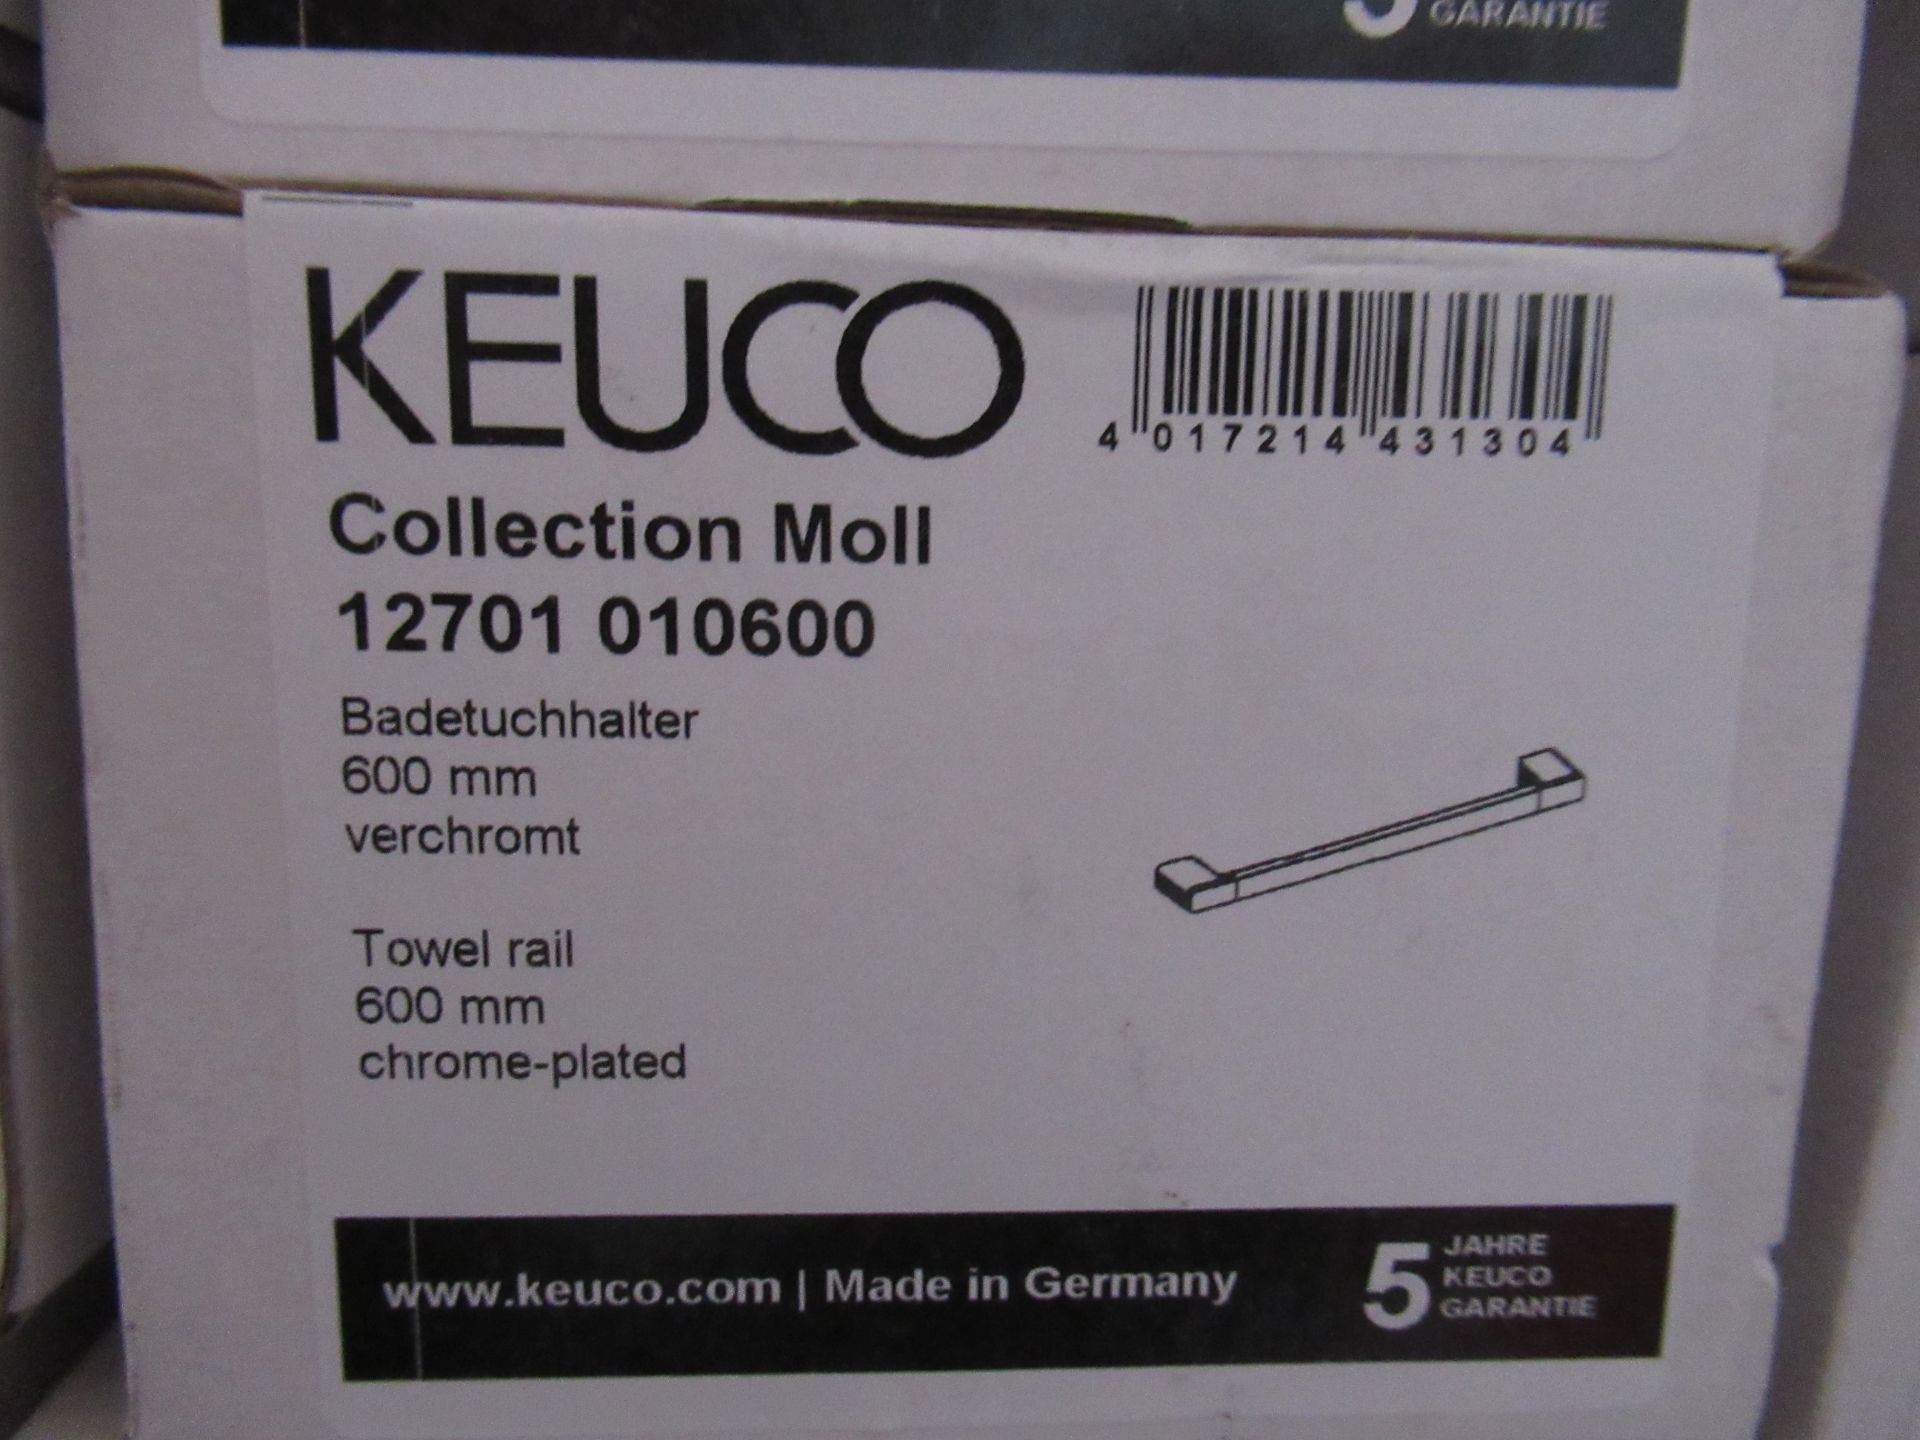 3 x Keuco Collection Moll Towel Rail Chrome Plated, P/N 12701-010600 - Image 2 of 2